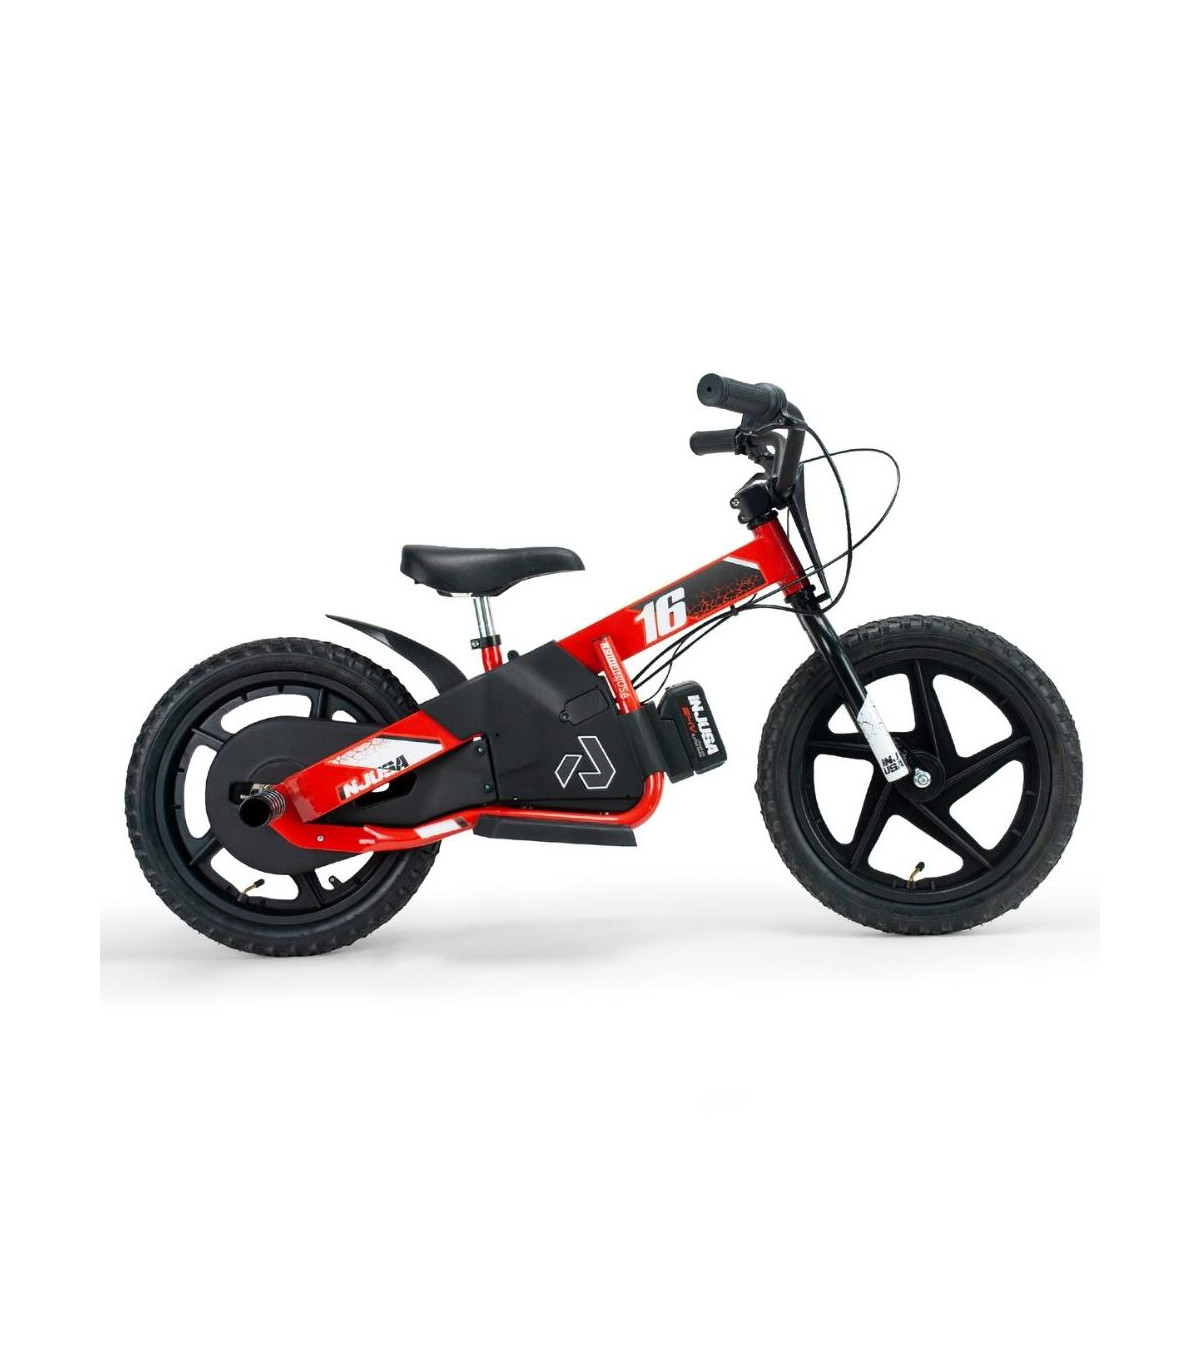  Bicicleta eléctrica para niños, [regalo fascinante para niños a  partir de 6 años] Hyper GoGo Bicicleta eléctrica para niños con luz  ambiental colorida, 3 velocidades máximas 10 Mph hasta 60 minutos